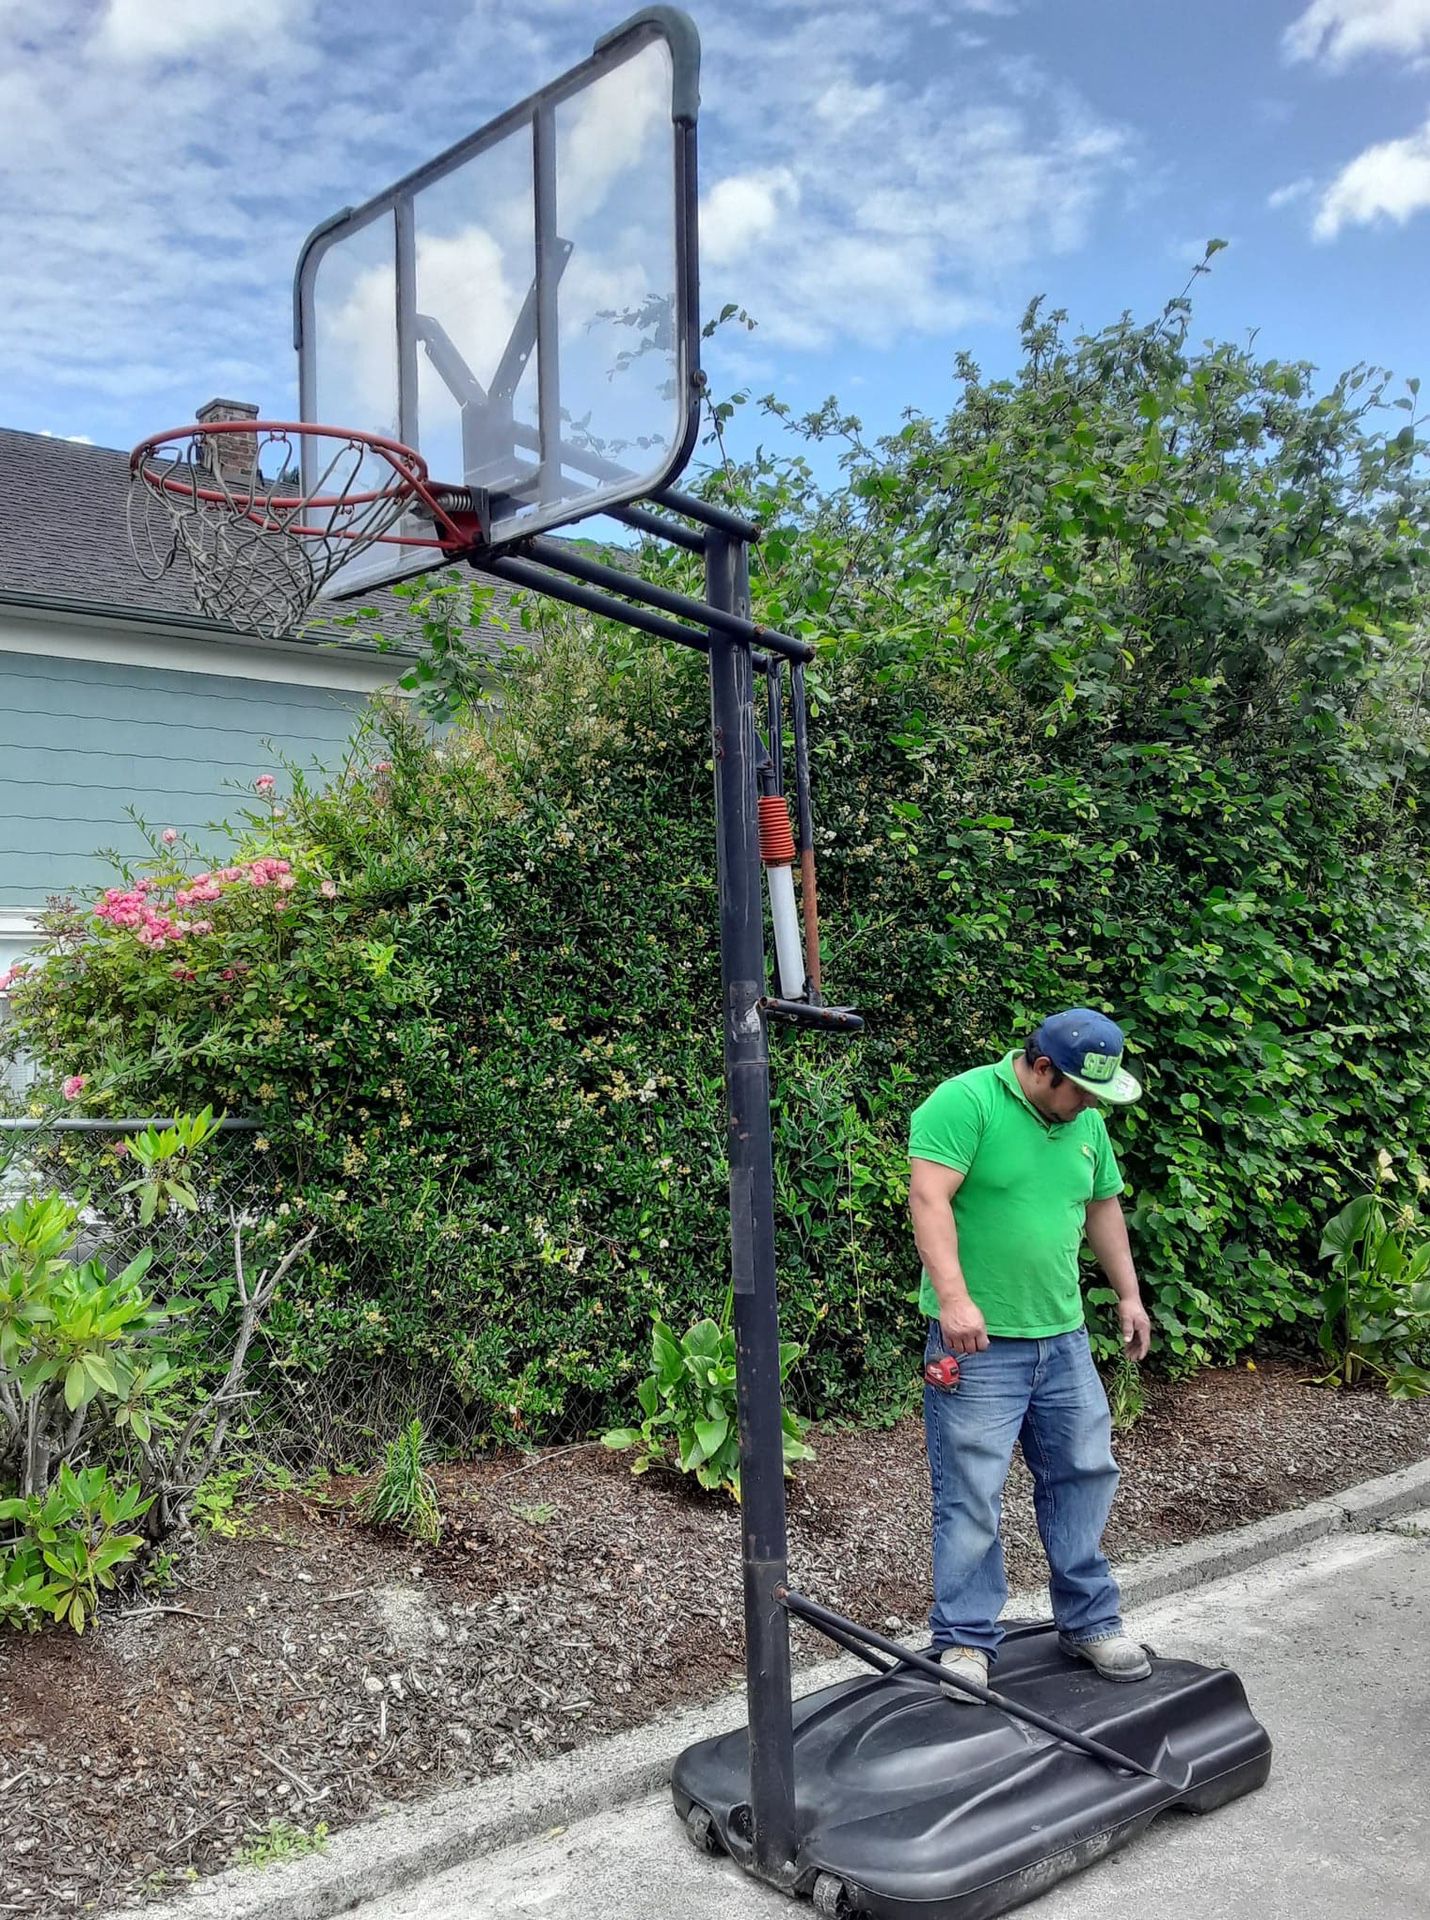 Spaulding Basketball Hoop- 10 ft to the ring